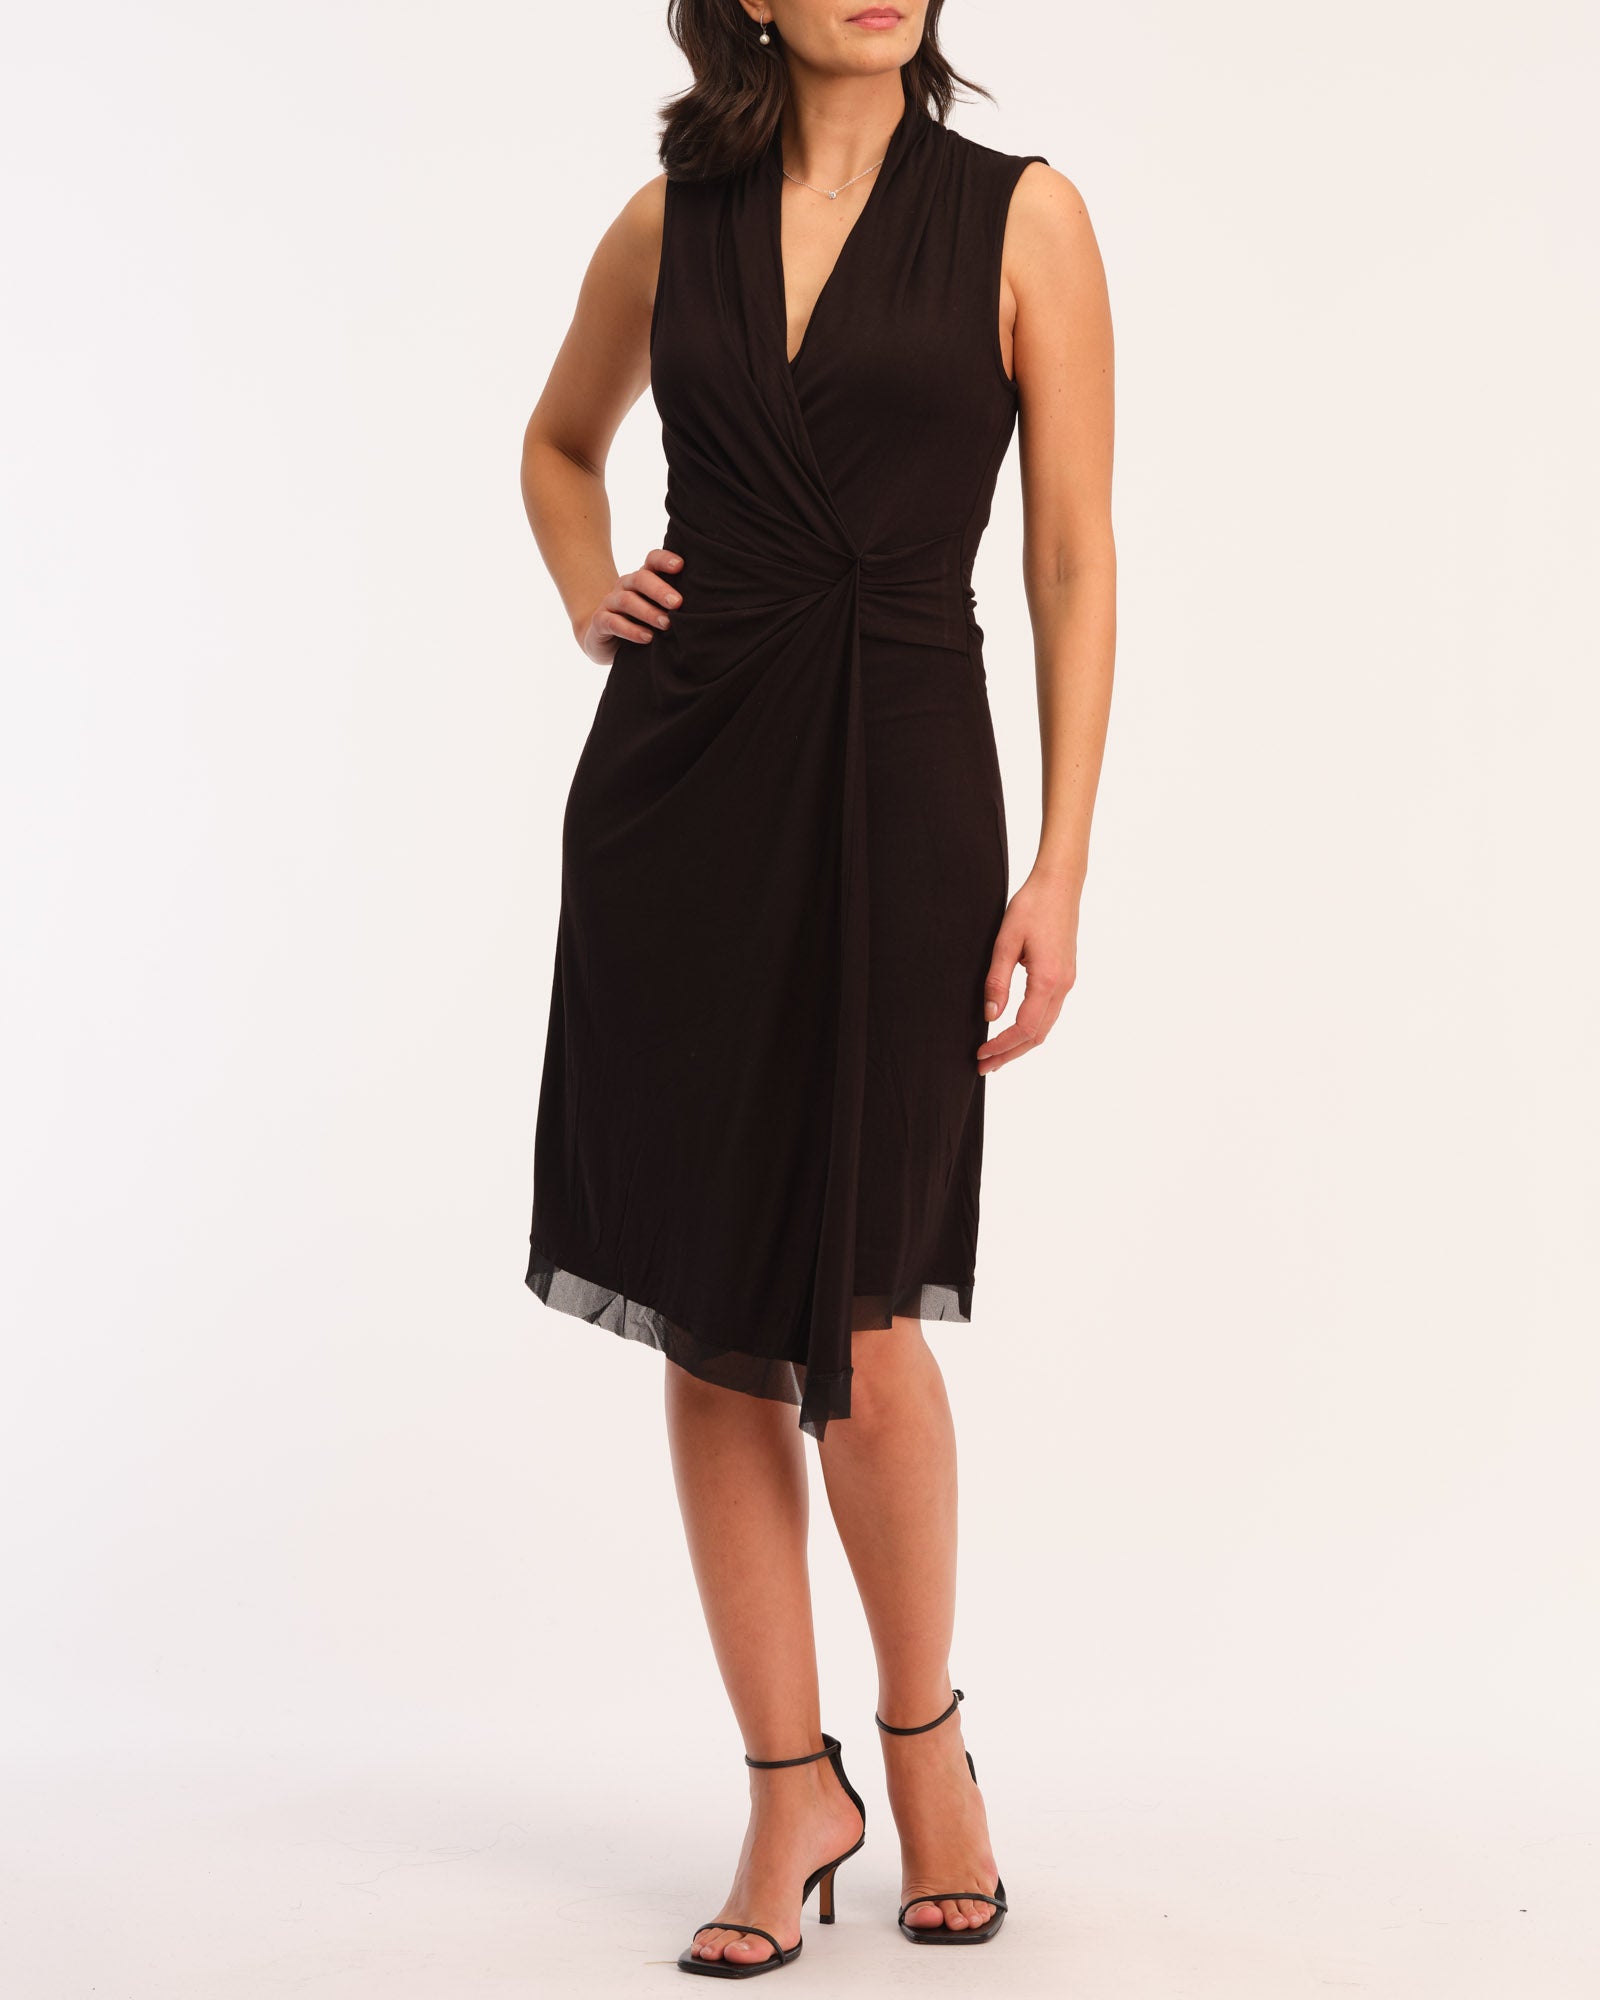 Elie Elie Tahari Women's Twist Front Jersey Dress | JANE + MERCER